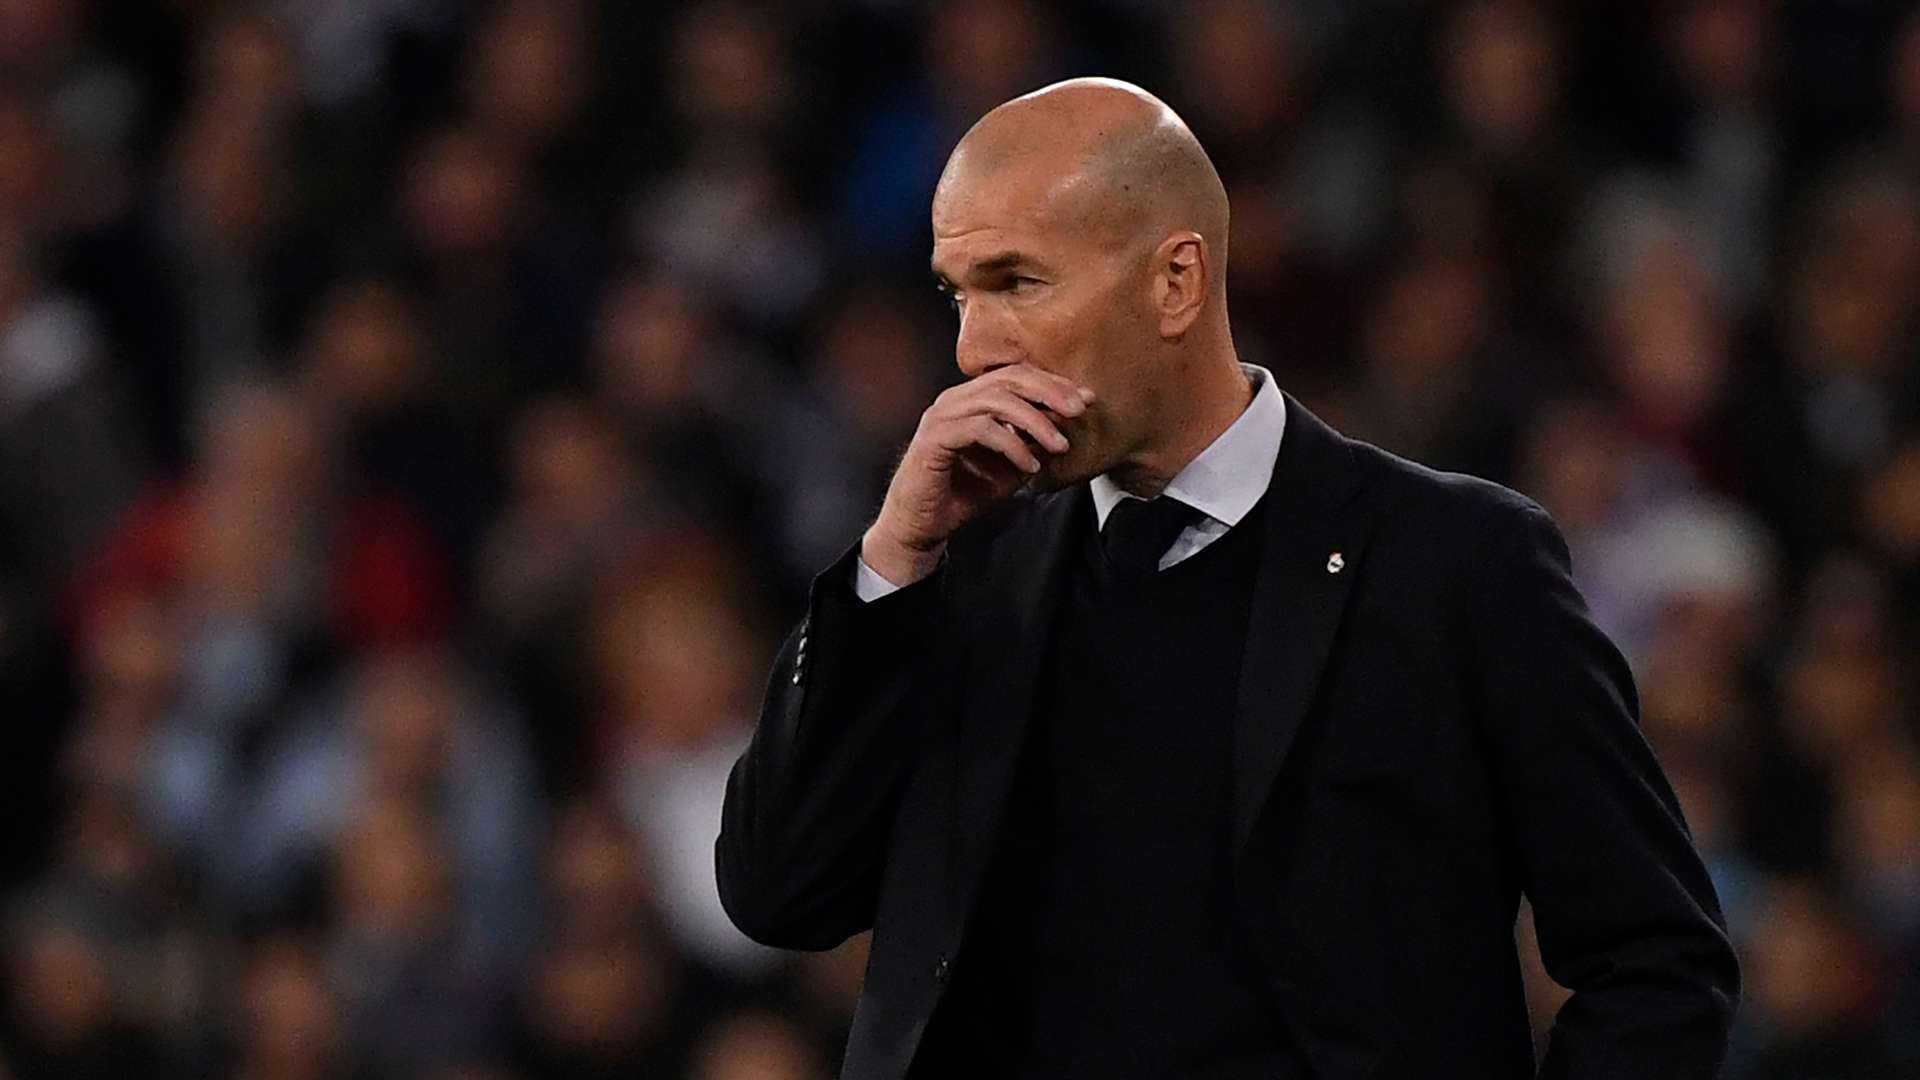 20200301_Zinedine_Zidane